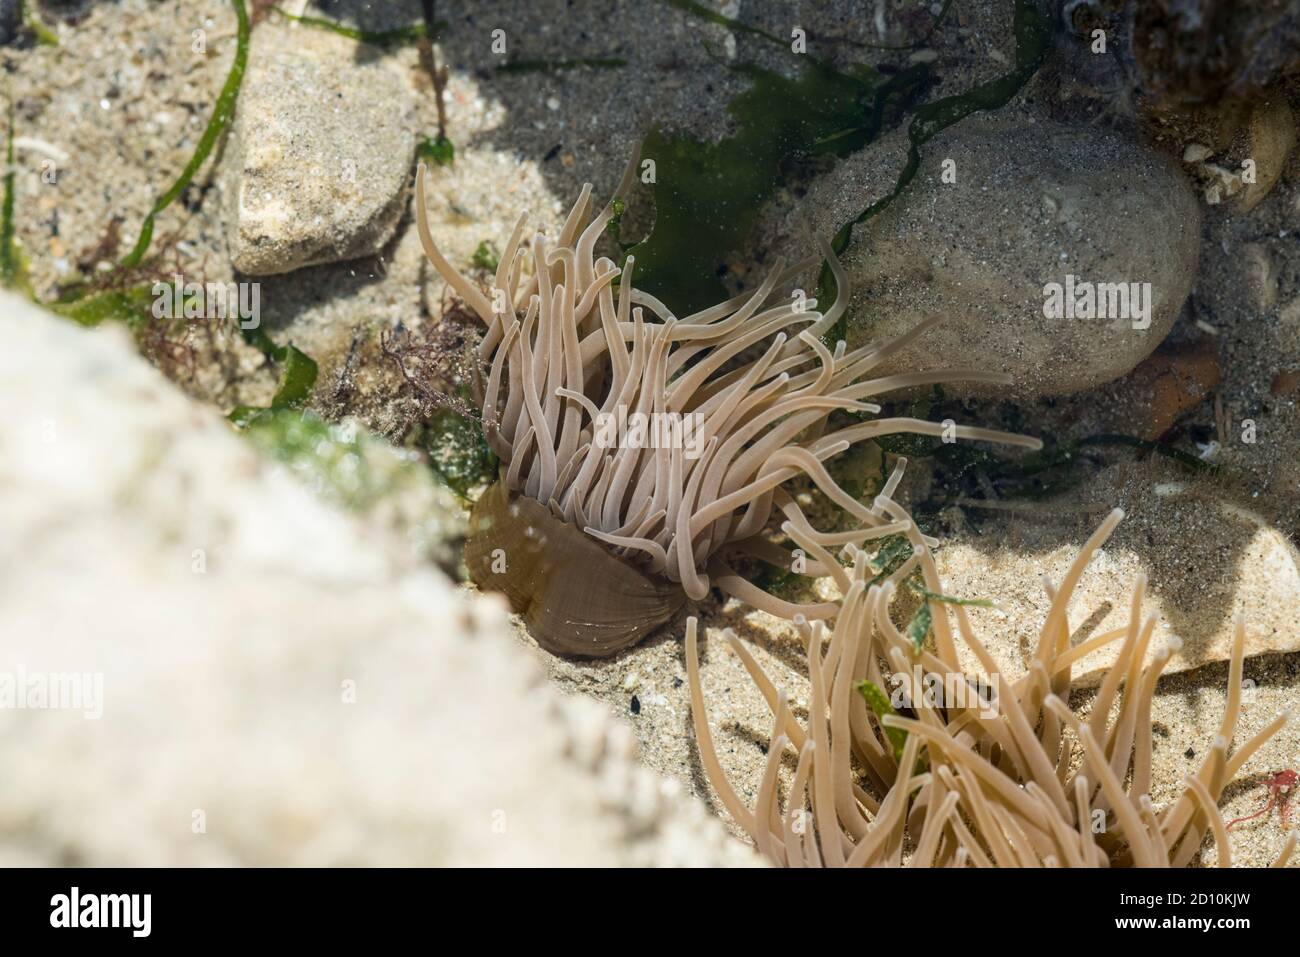 Snakelocks Anemone (Anemonia viridis) in a rock pool Stock Photo